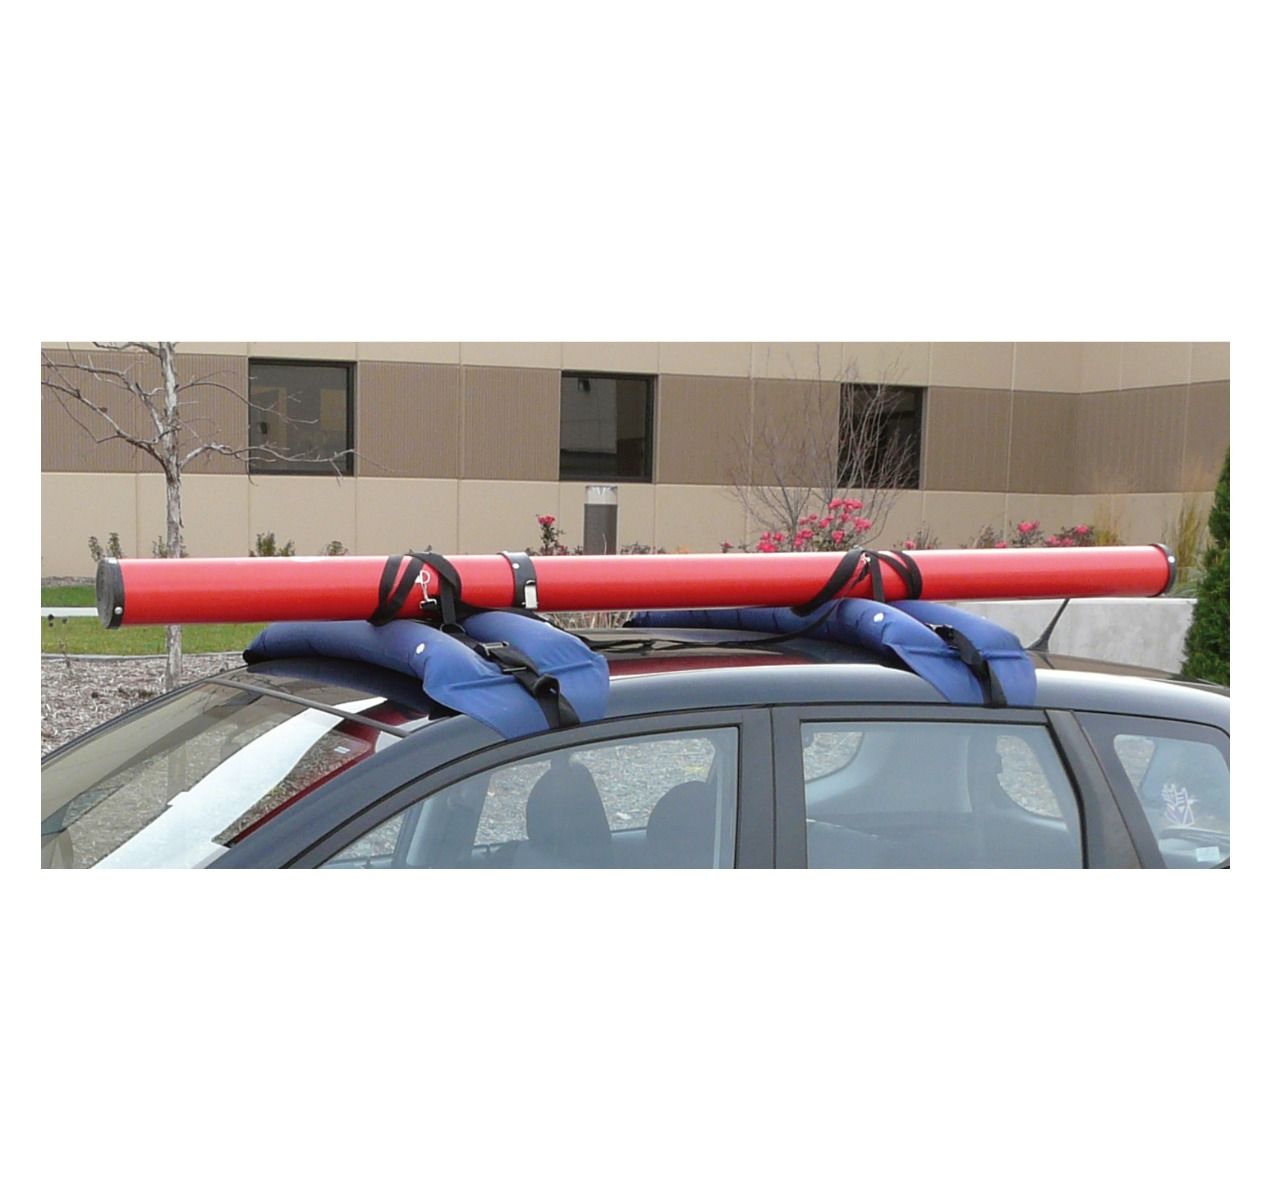 Gill Athletics Handirack Inflatable Roof Rack Strength Depot